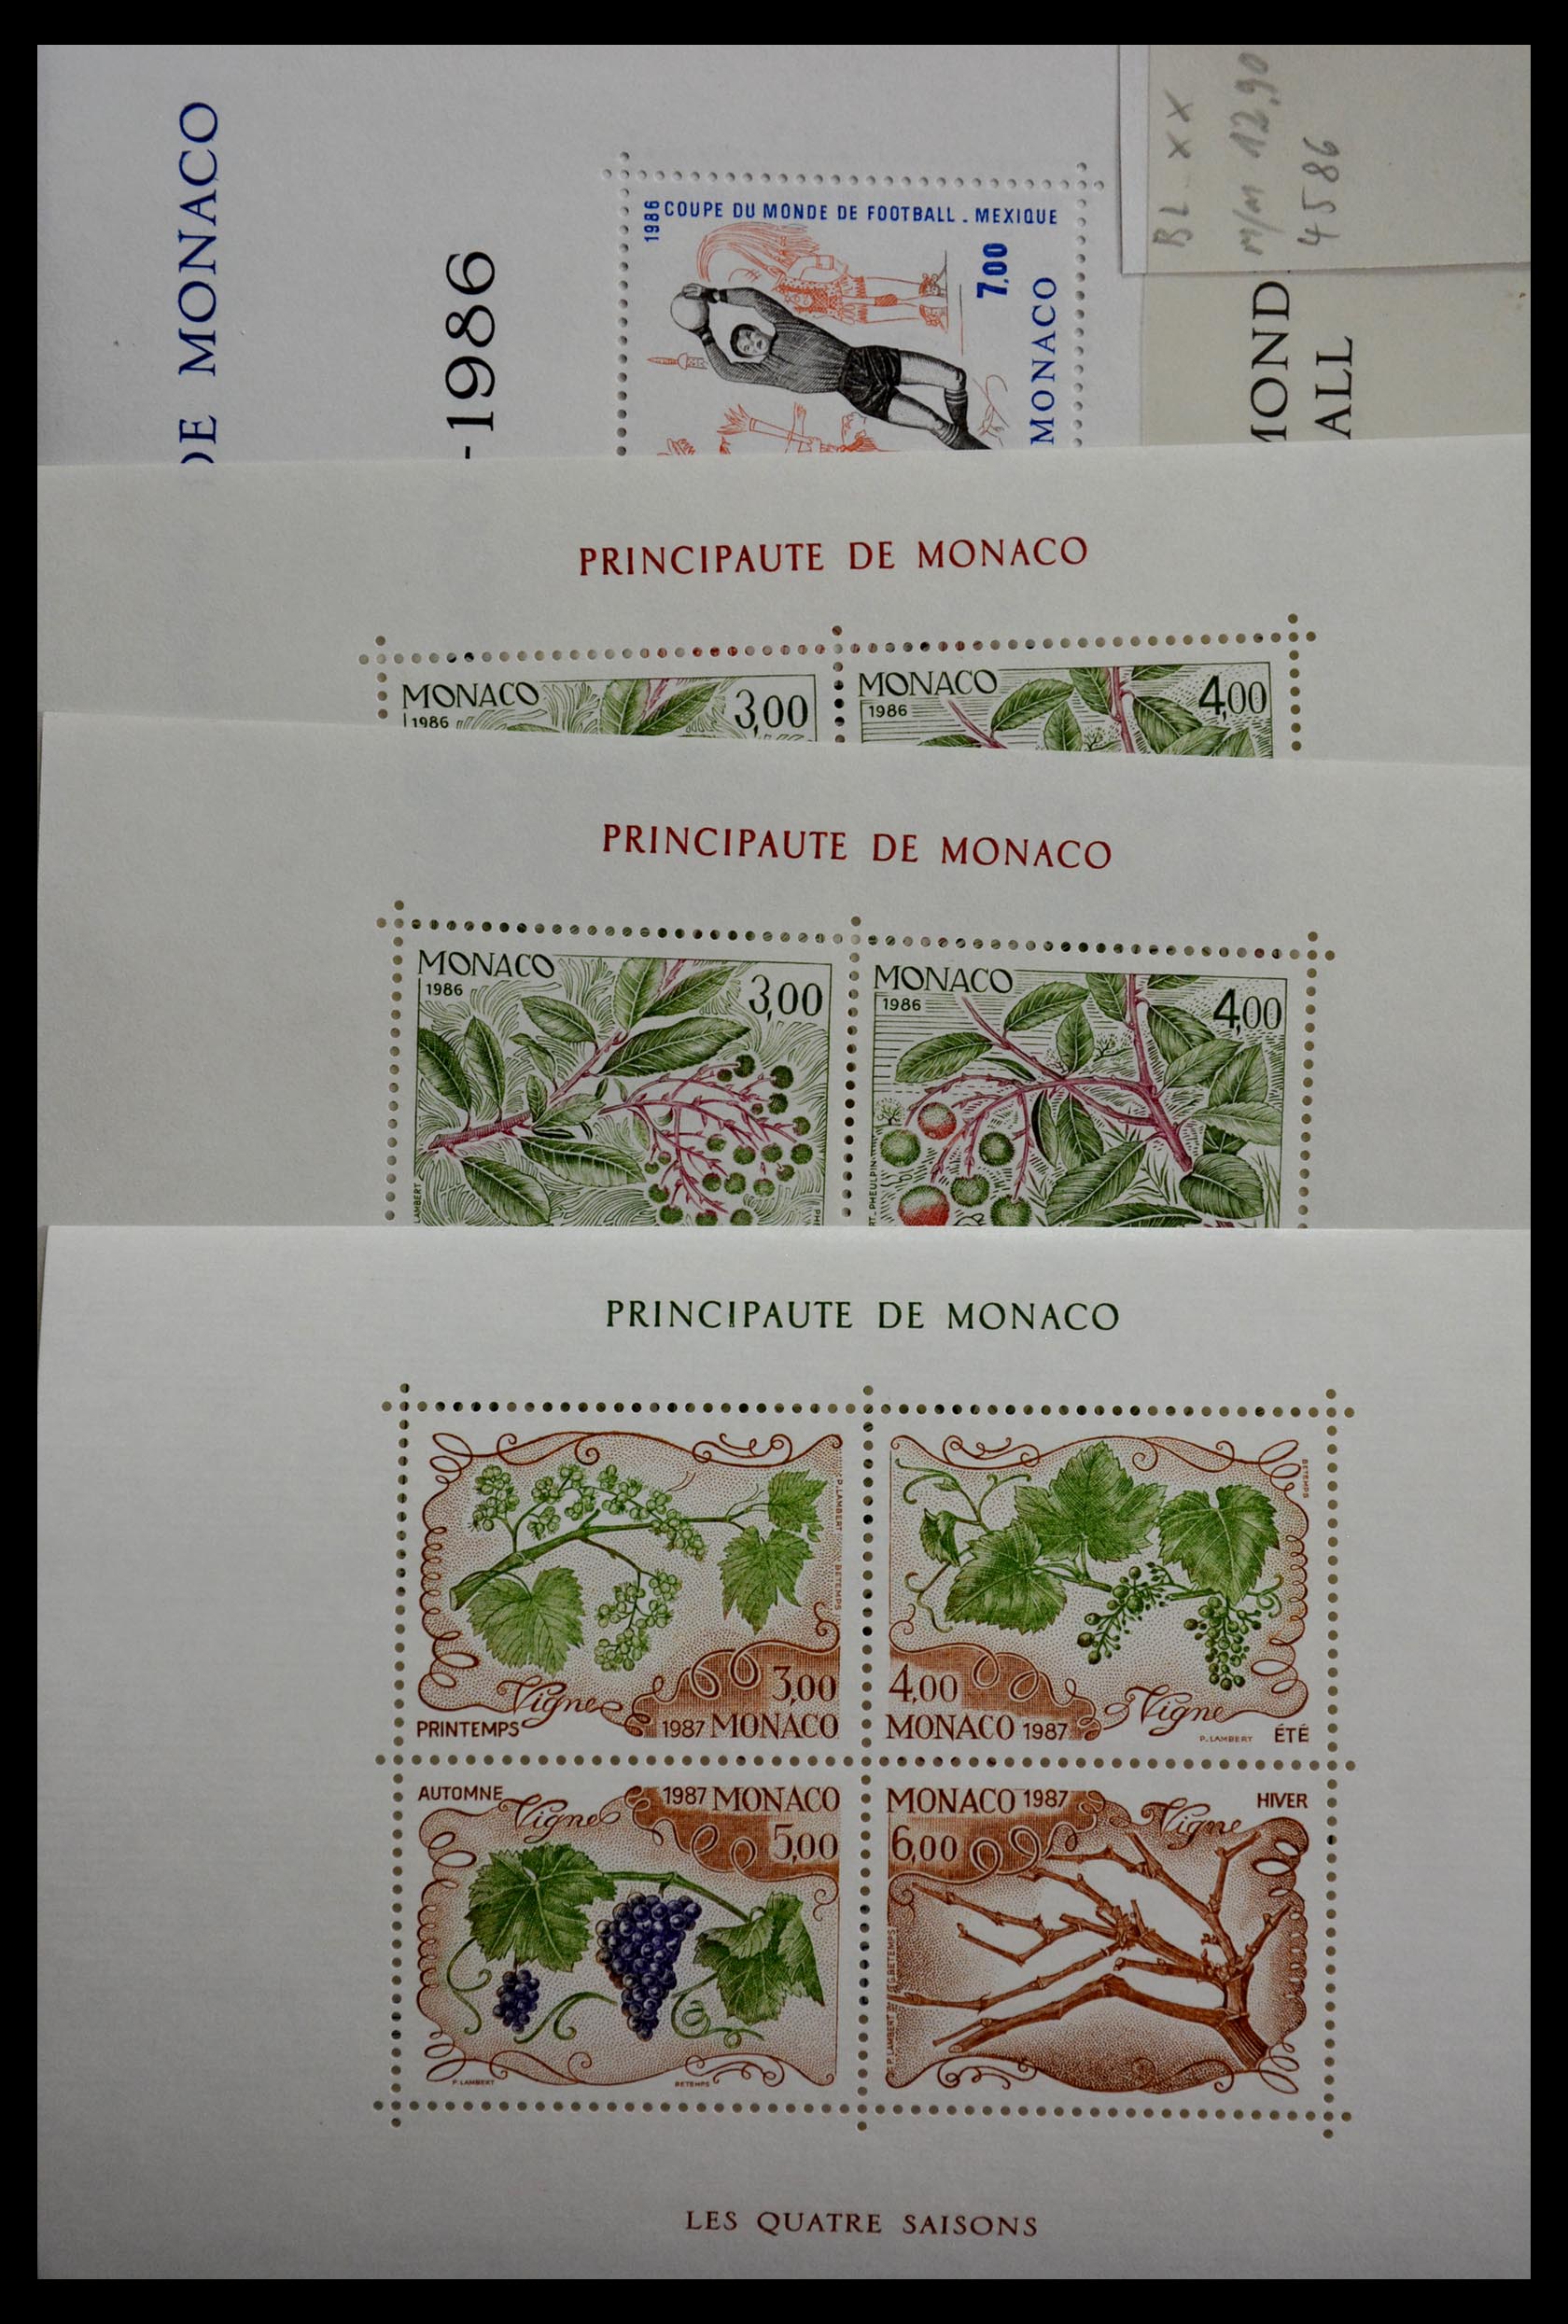 28986 075 - 28986 Souvenir sheets Western Europe.